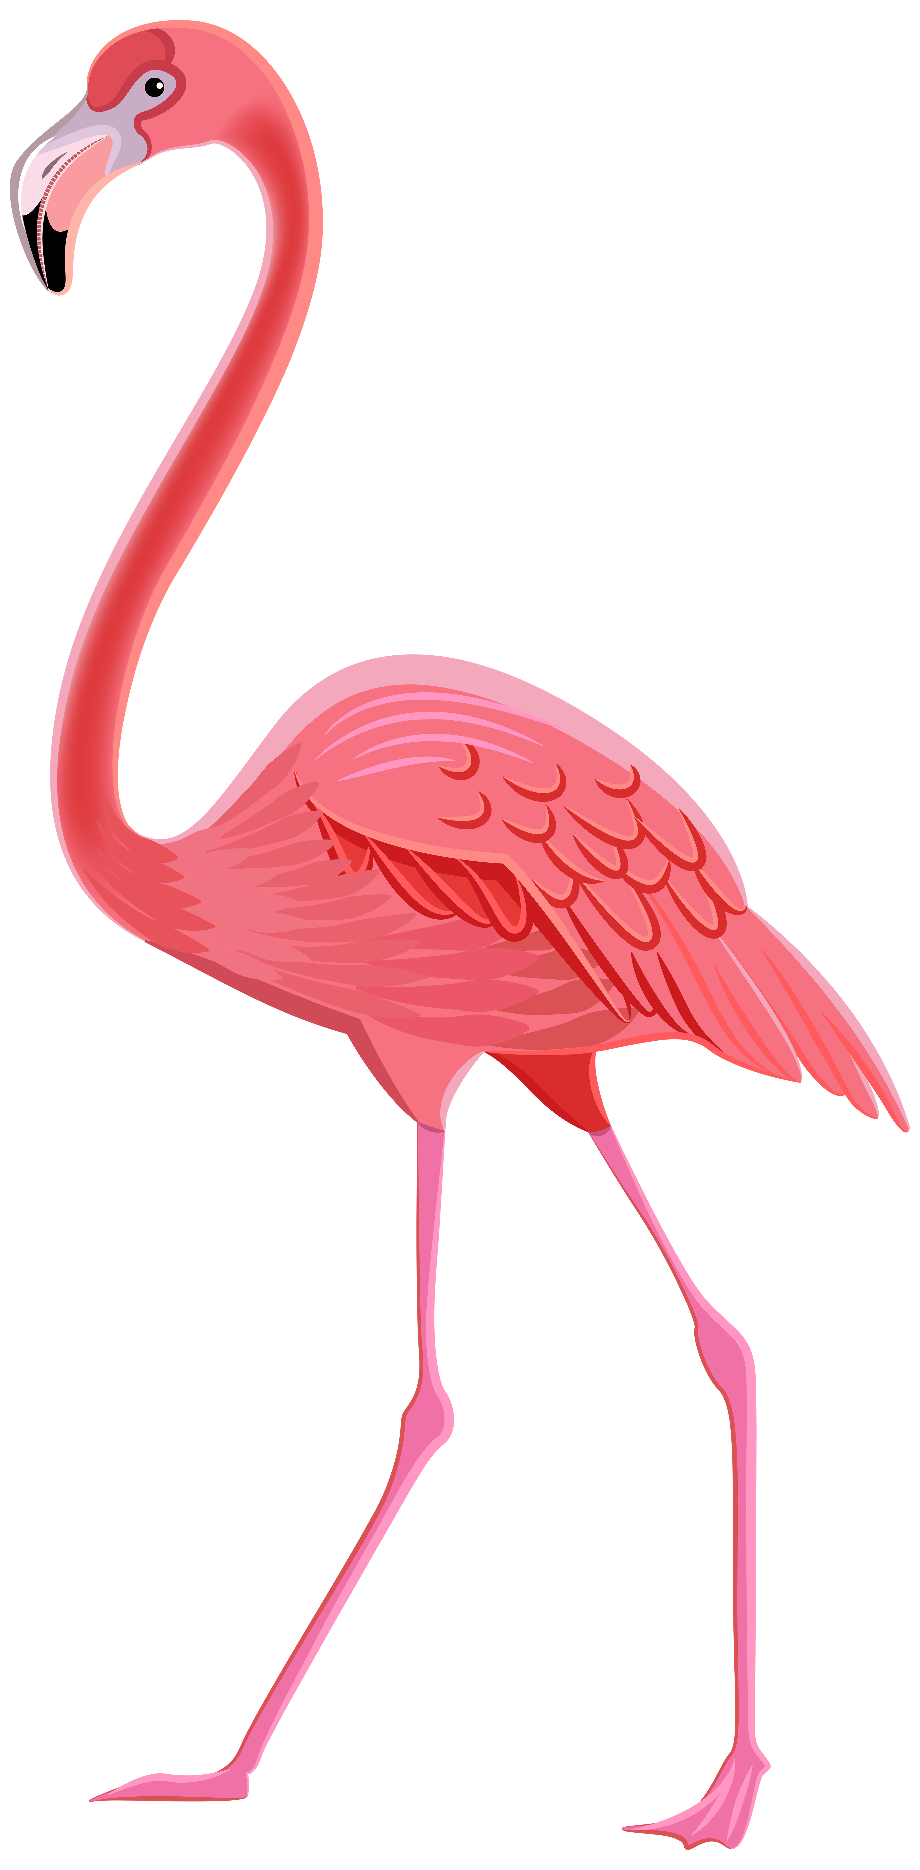 Hot pink flamingo clipart - ausxoler